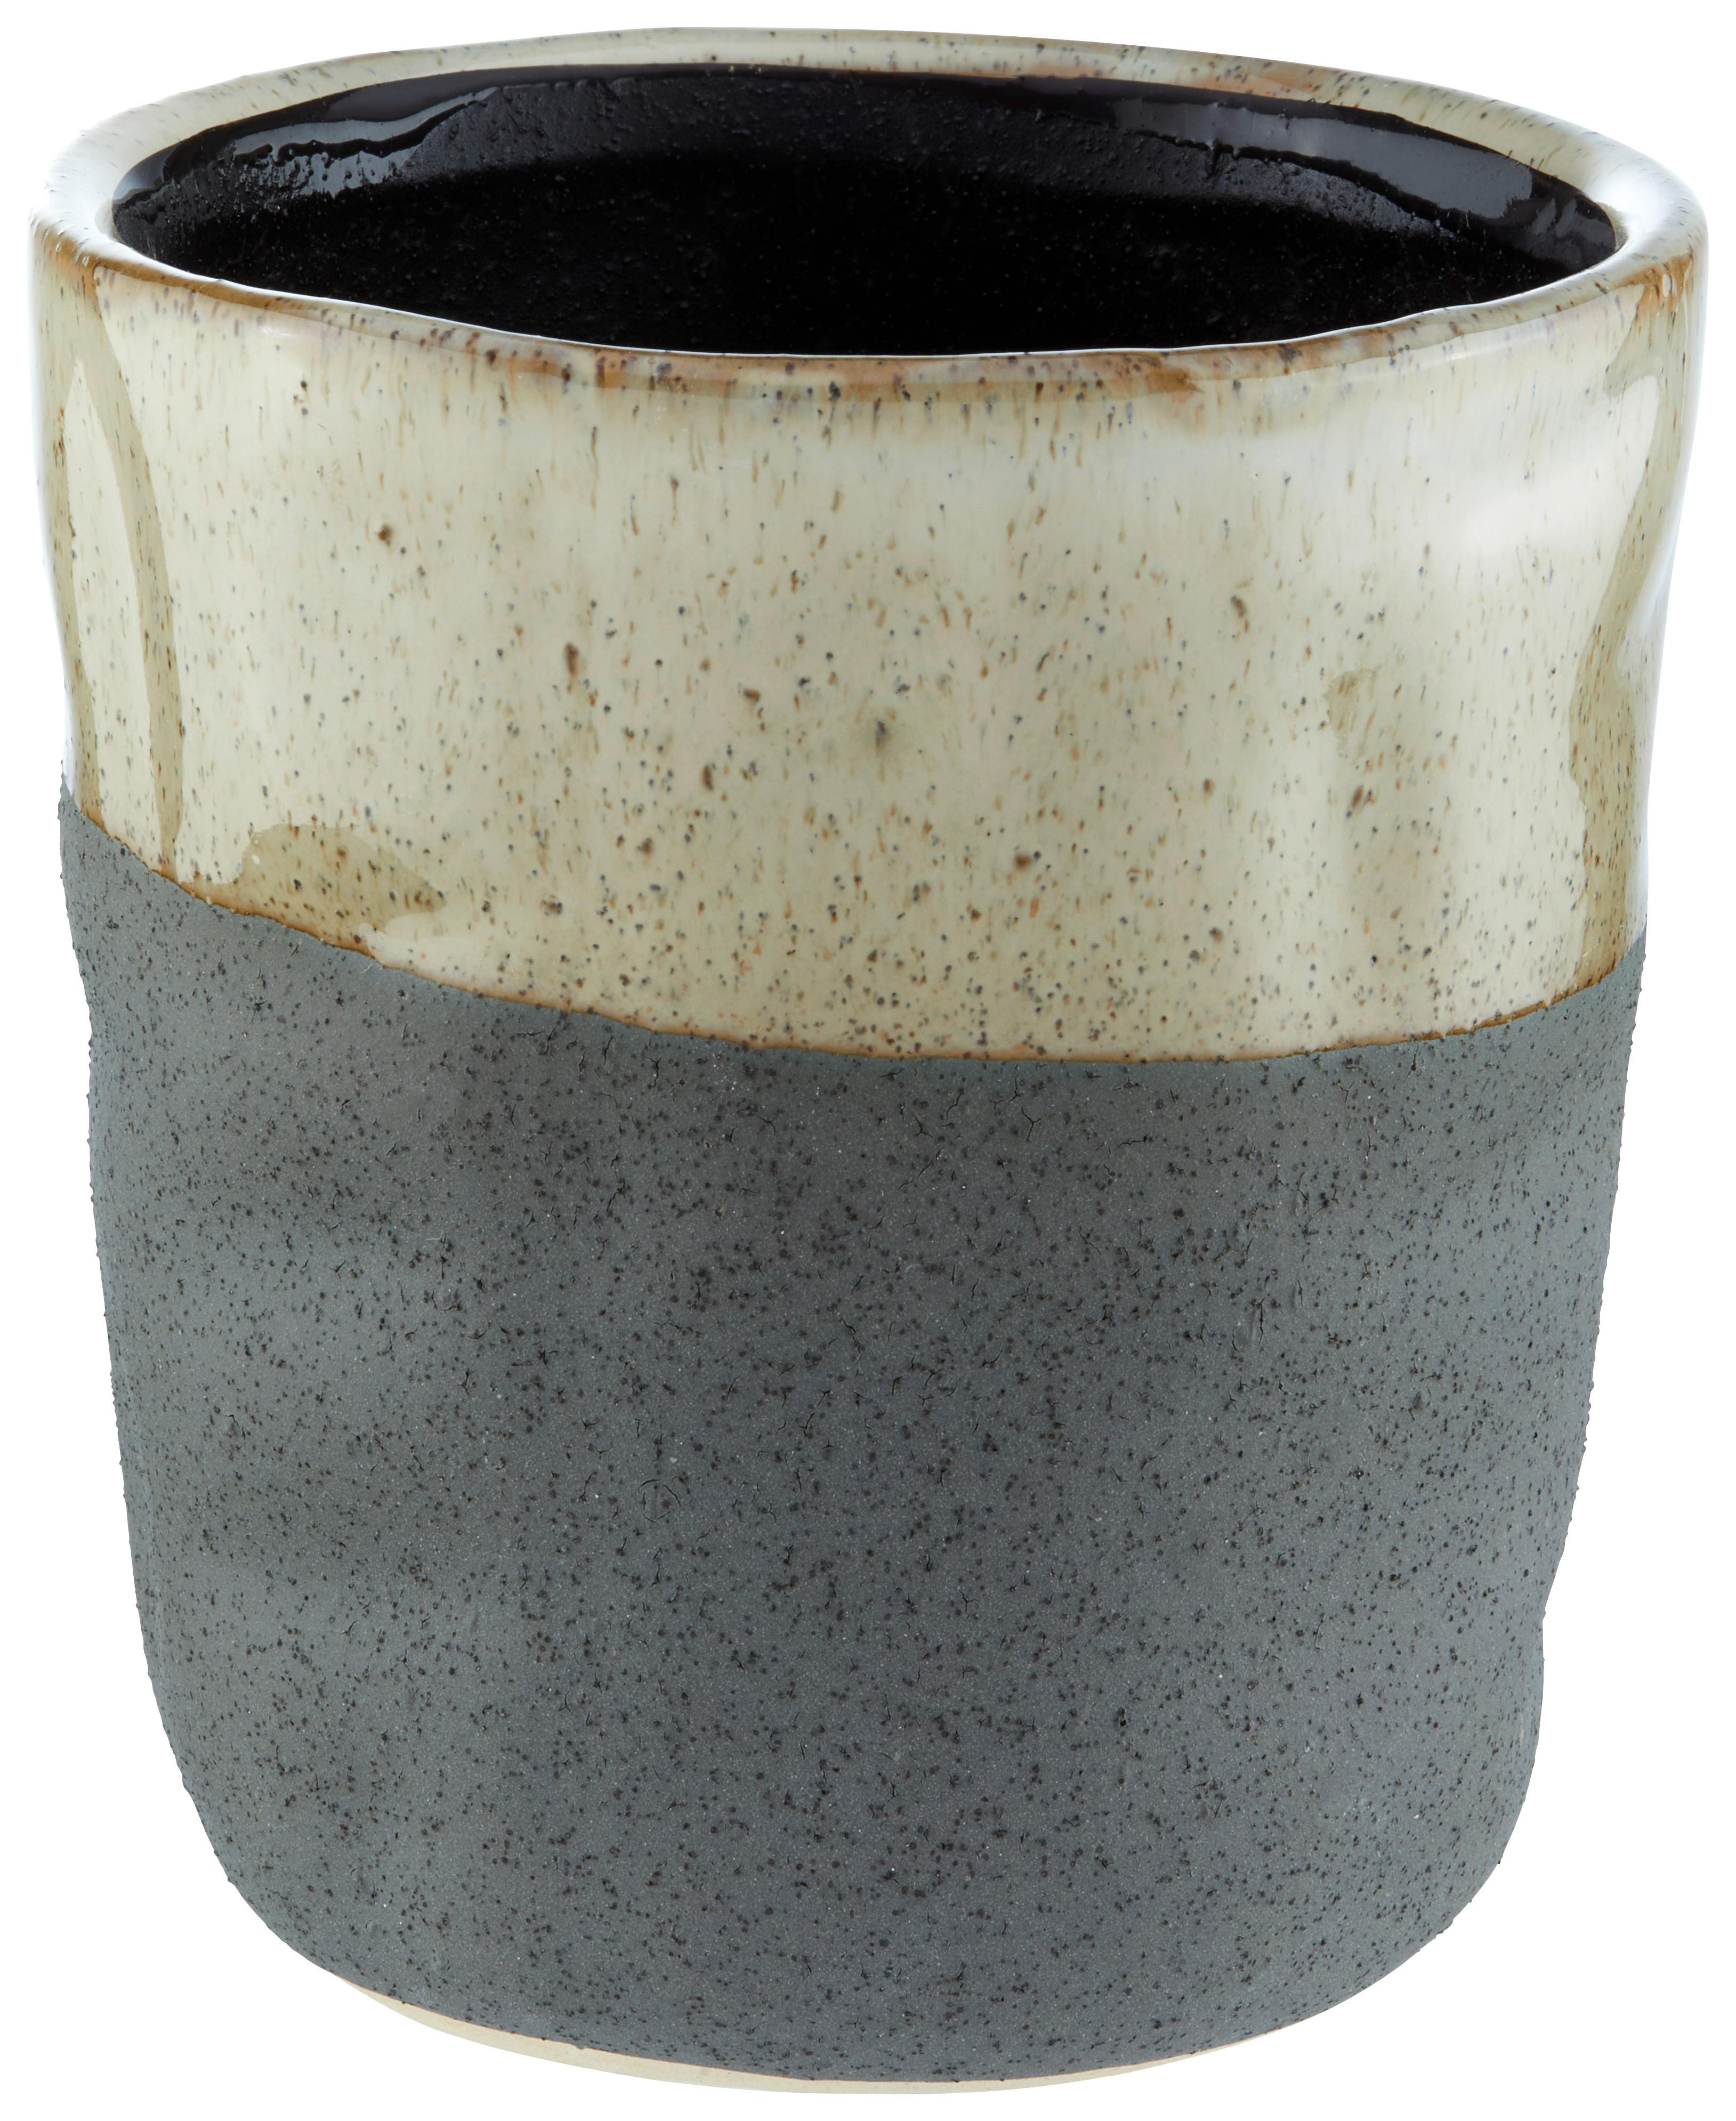 Übertopf Stoneware aus Steinzeug Ø ca. 12cm - Grau, Keramik (12/13cm) - Modern Living